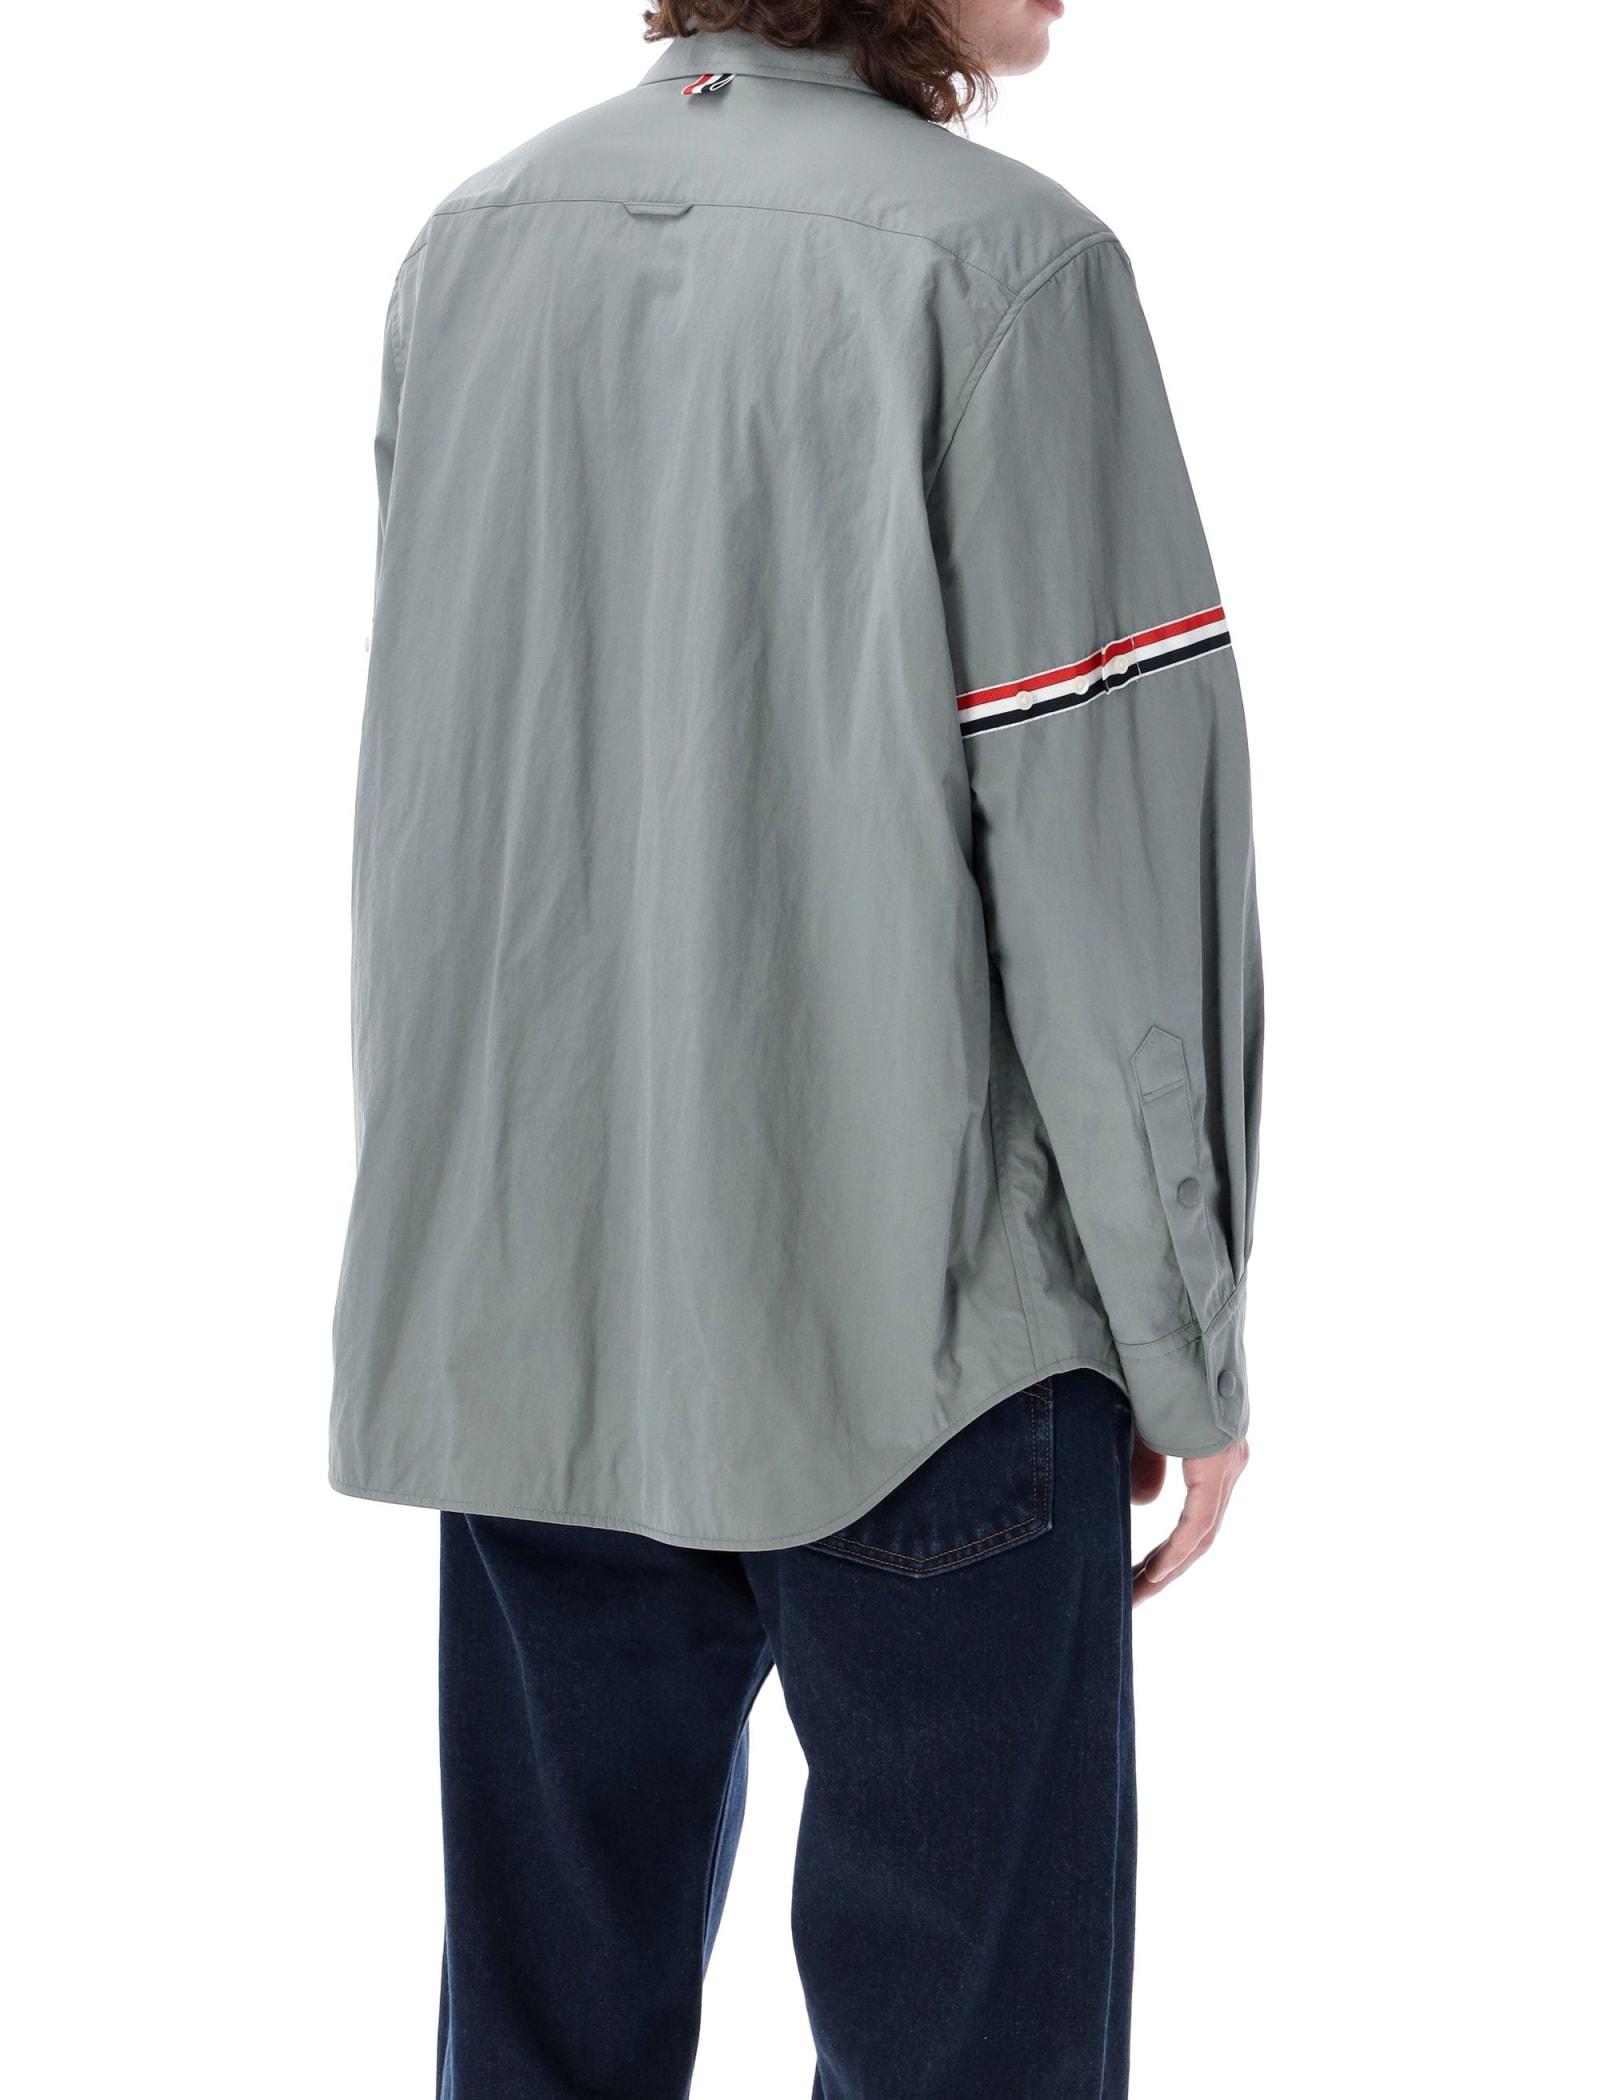 Thom Browne Rwb Armband Piquè Shirt Jacket in Grey for Men | Lyst UK